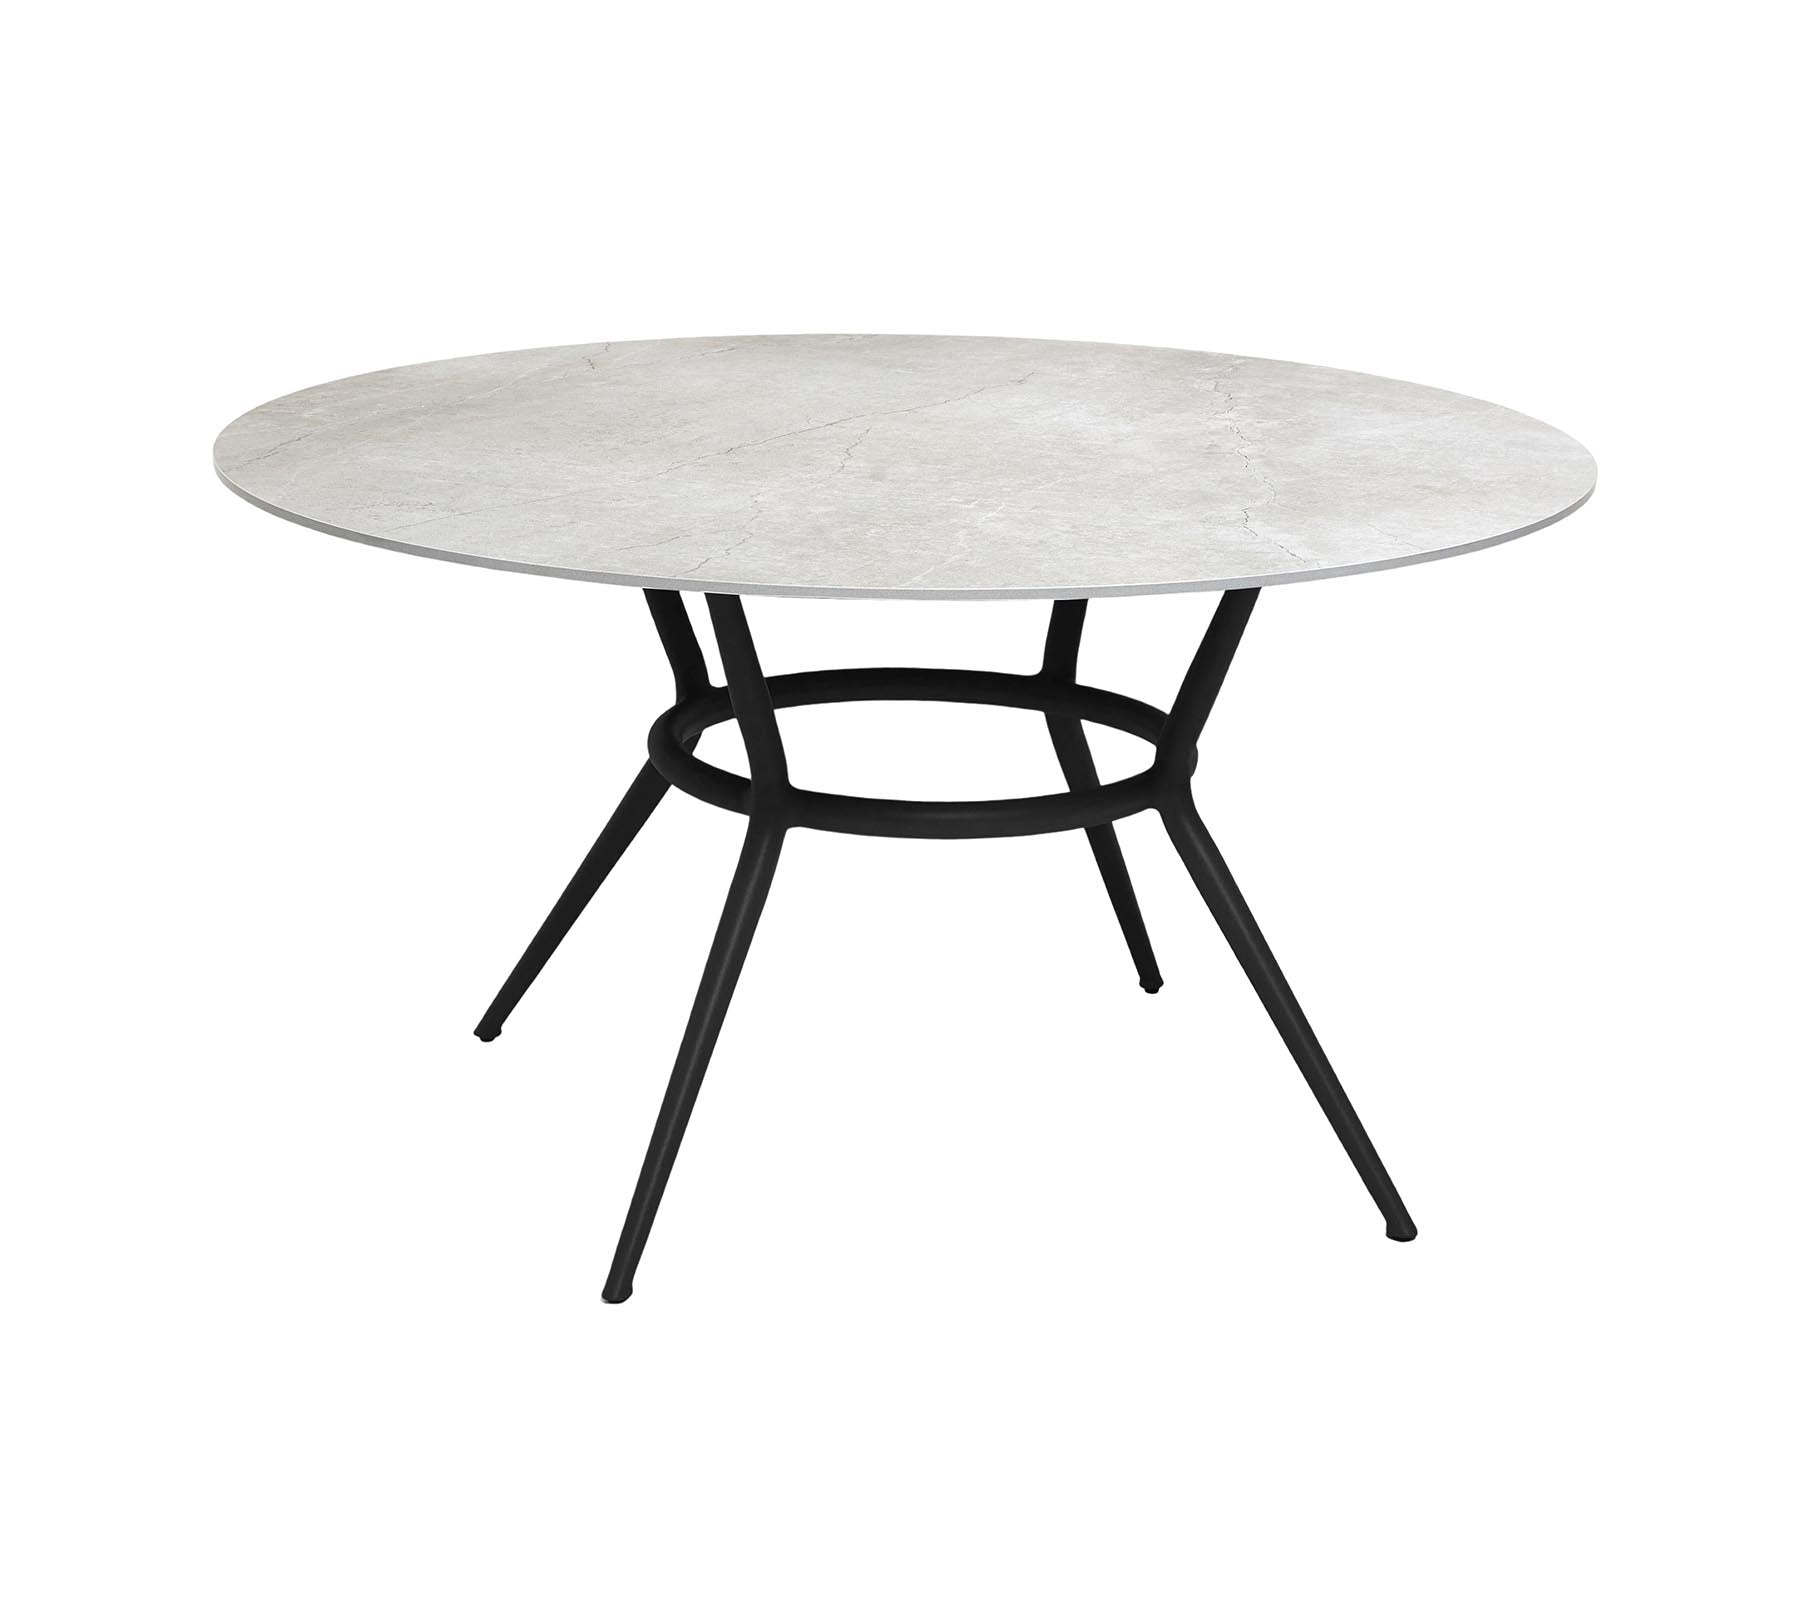 Cane-Line - Joy dining table, dia. 144 cm w/teak dia. 120 cm | 50202A